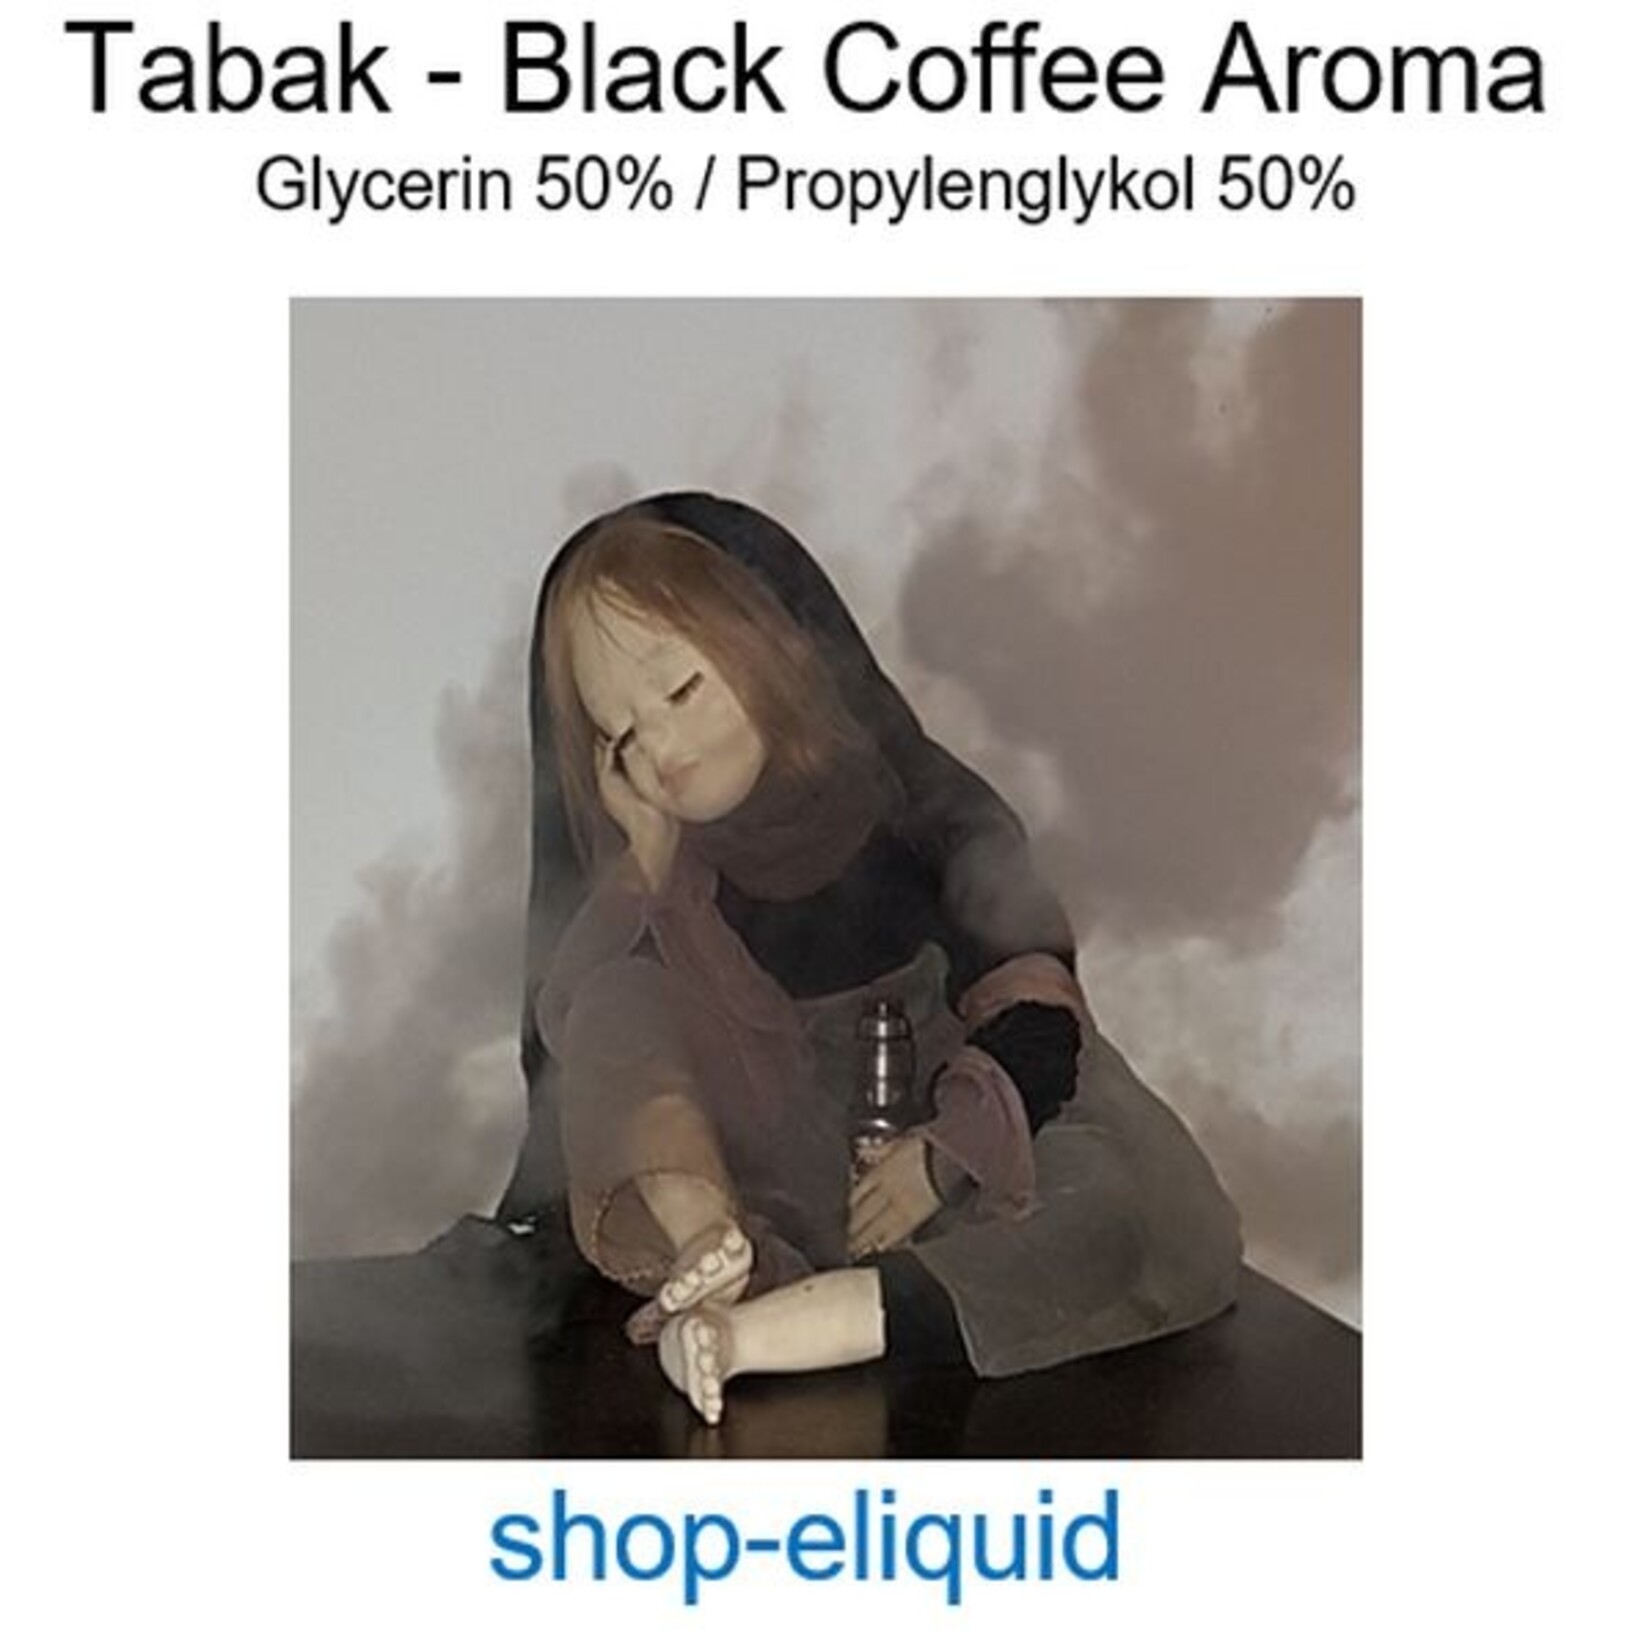 shop-eliquid Tabak - Black Coffee Aroma